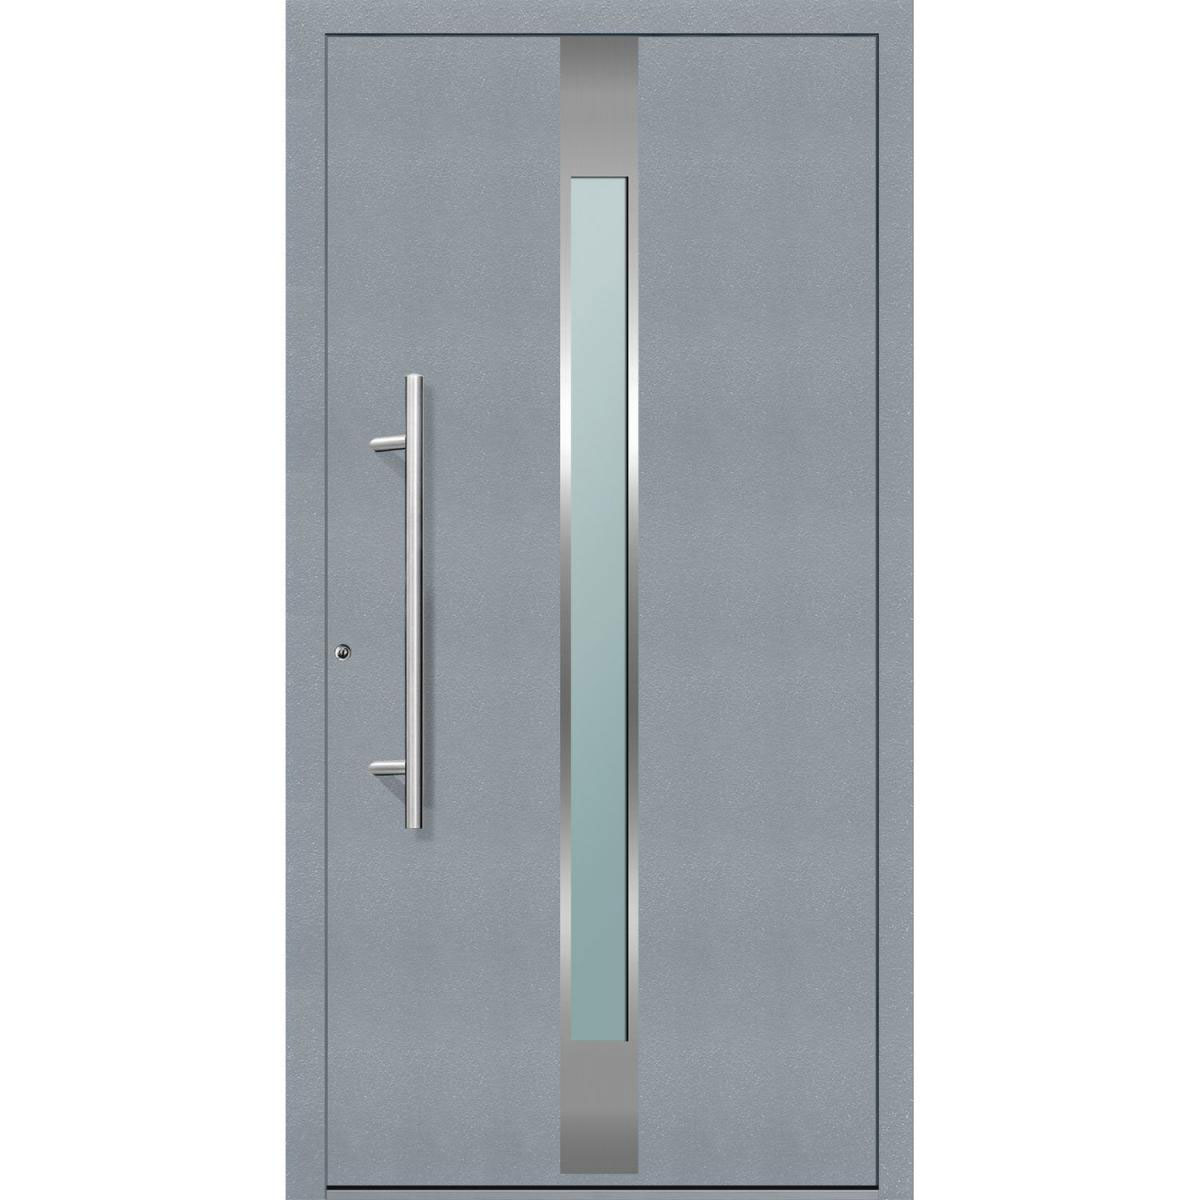 Aluminium Sicherheits-Haustür „Rimini Exklusiv“, 75mm, grau, 110x210 cm, Anschlag links, inkl. Griffset